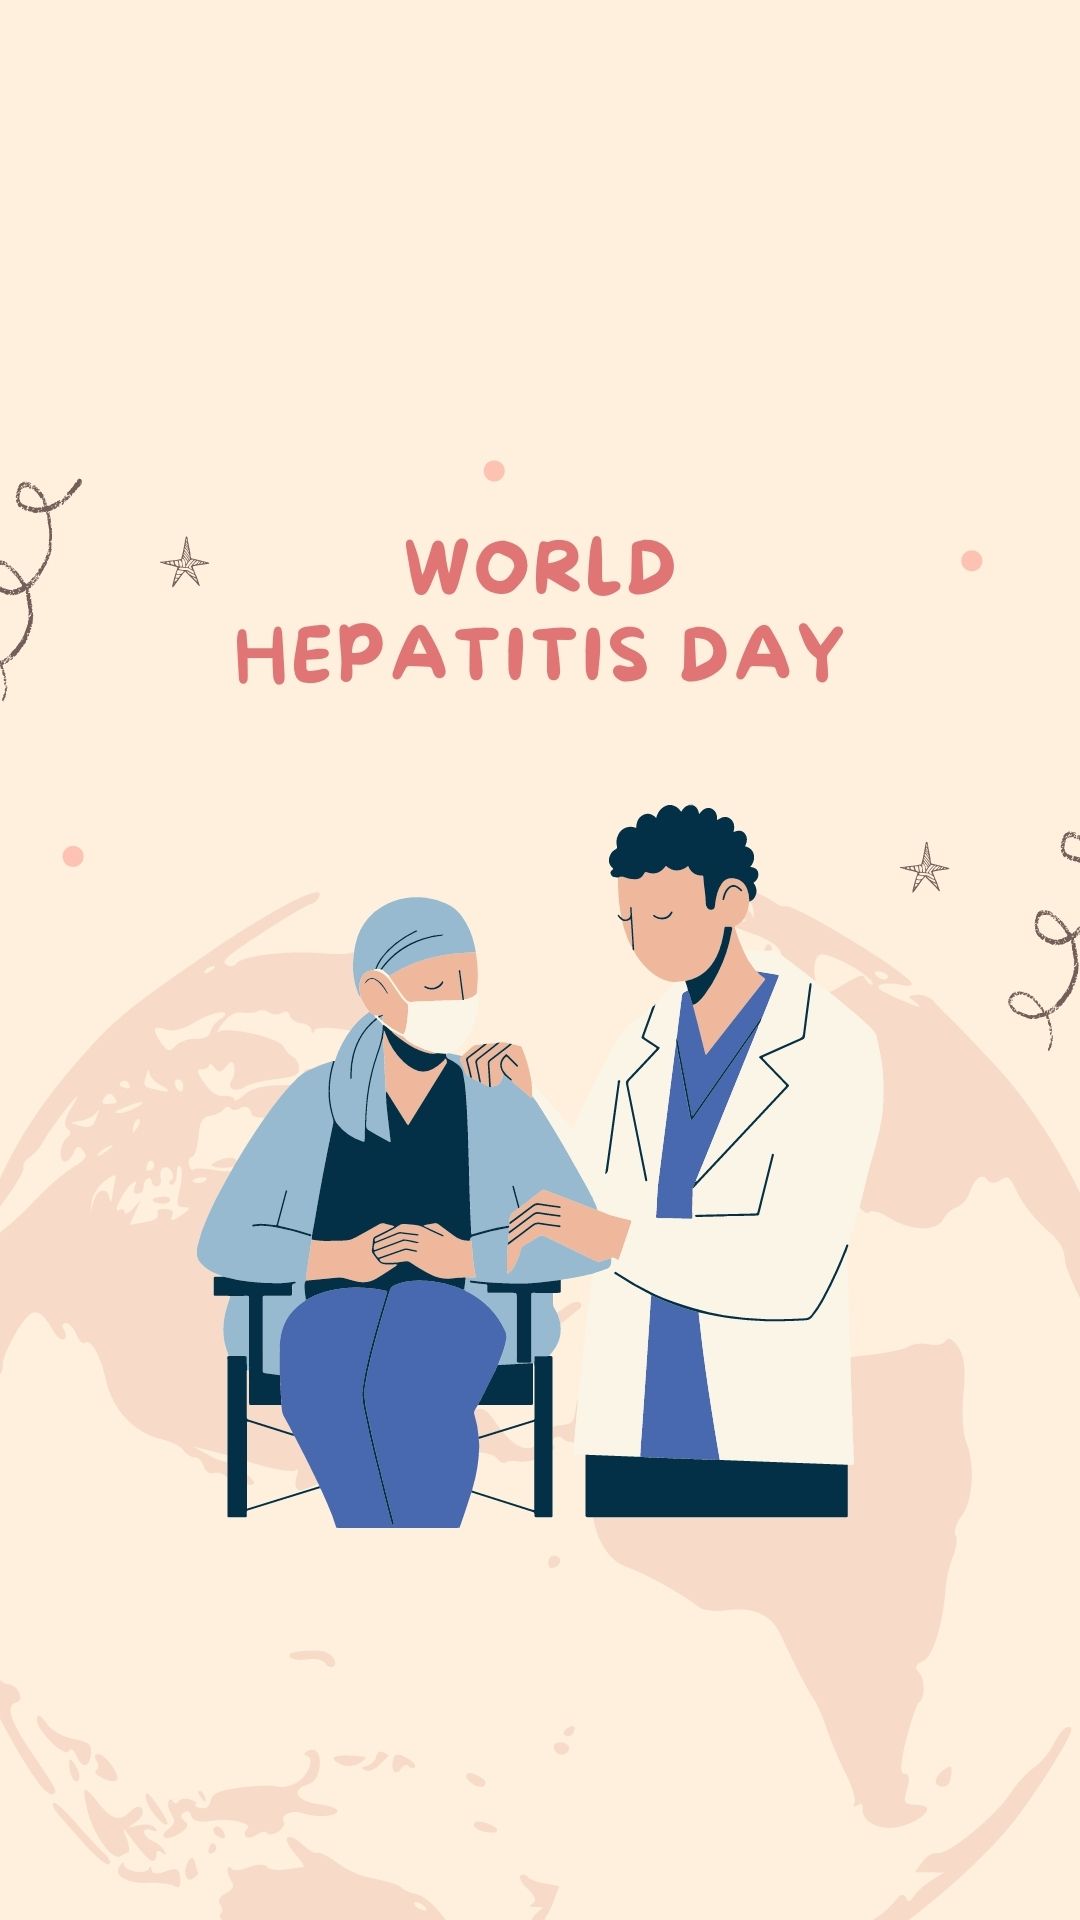 world hepatitis day images for instagram or facebook posts (3)